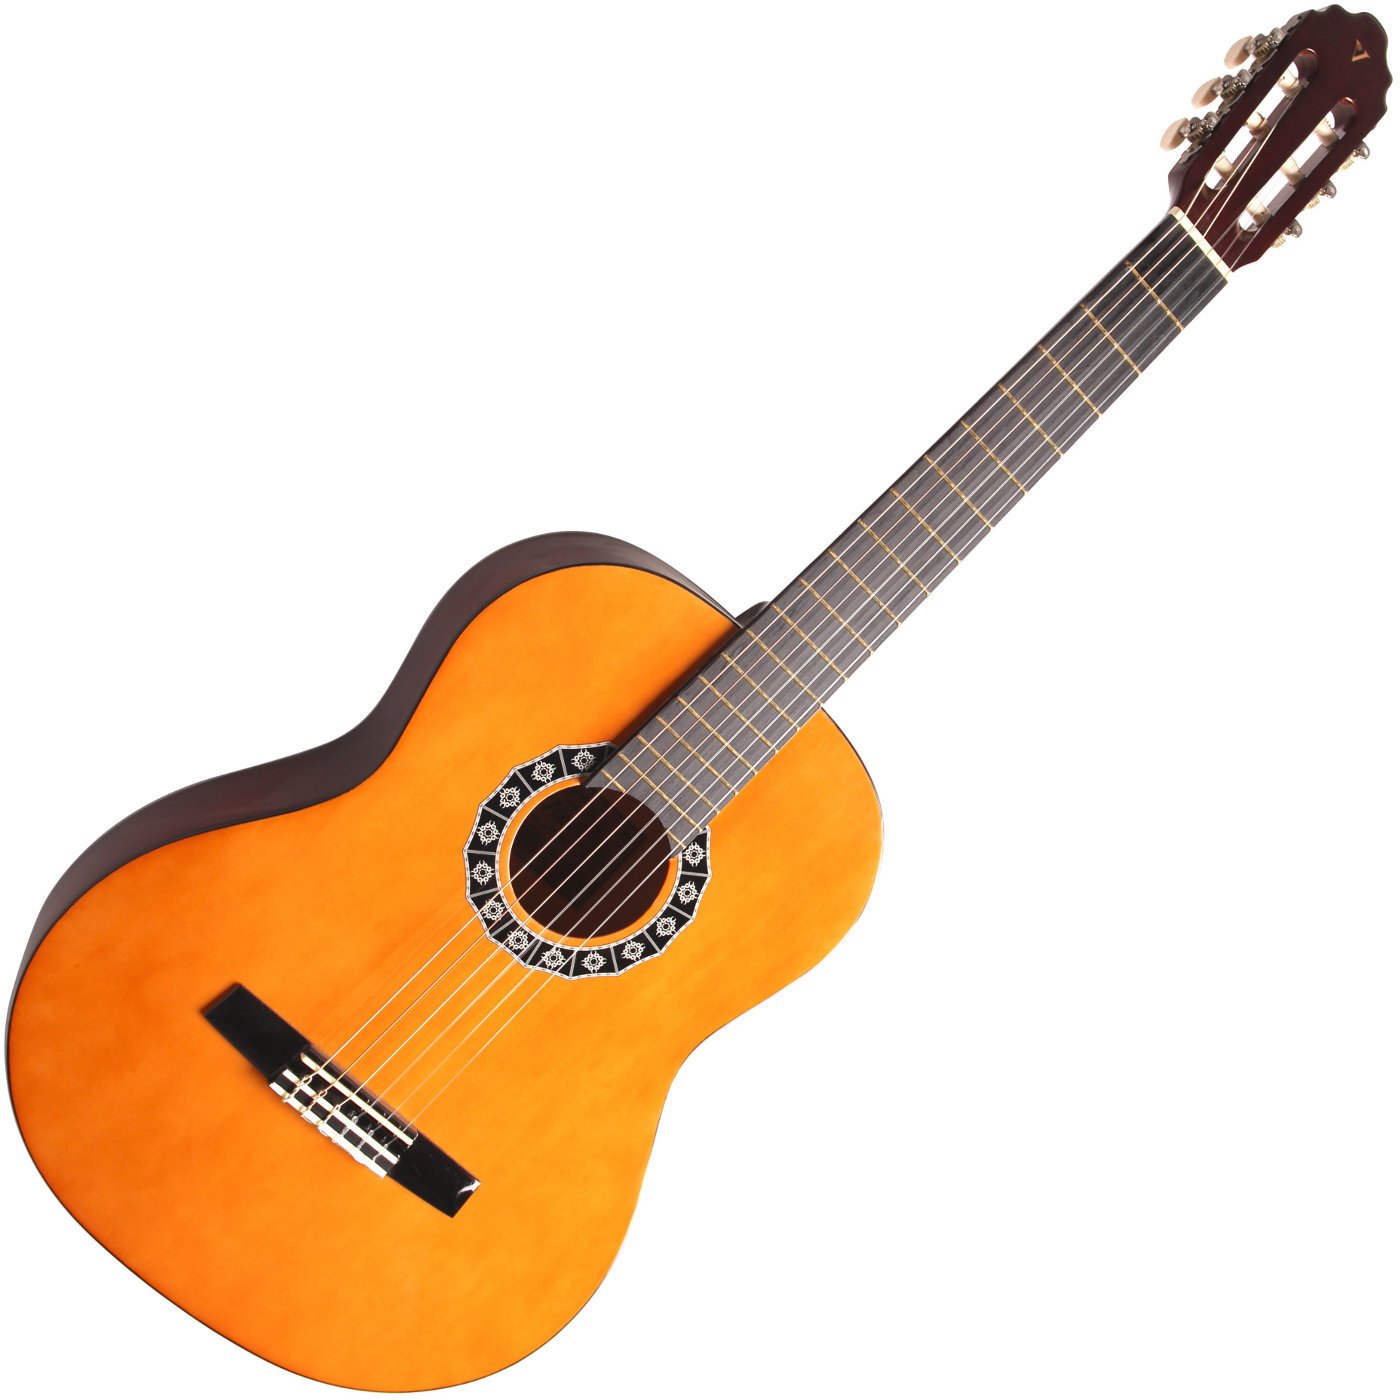 Guitare classique taile 3/4 pour enfant Valencia CA1-3/4-NA